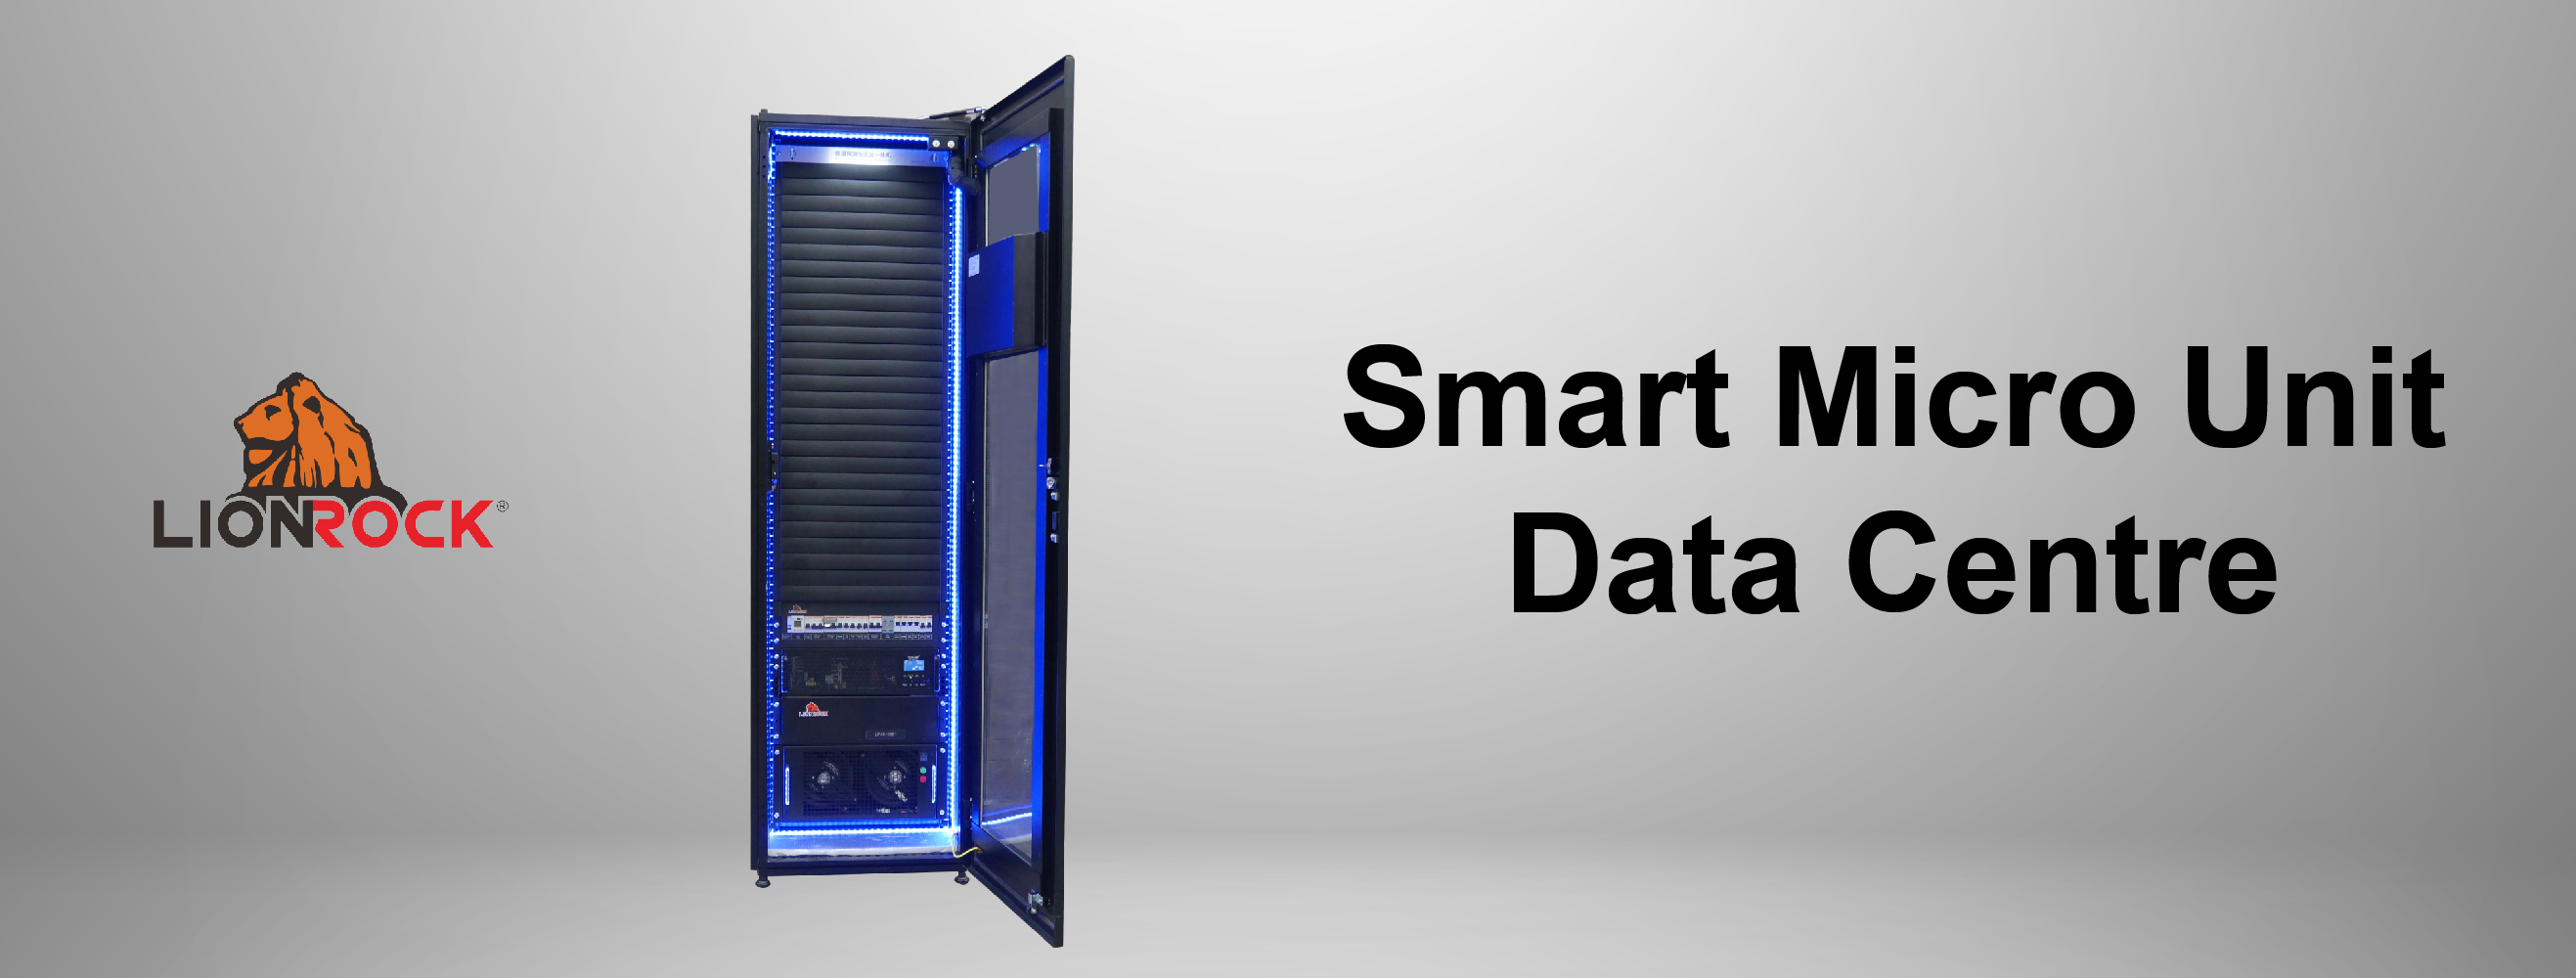 LionRock- Smart Micro Unit Data Centre,Product,NEWS,3TECH